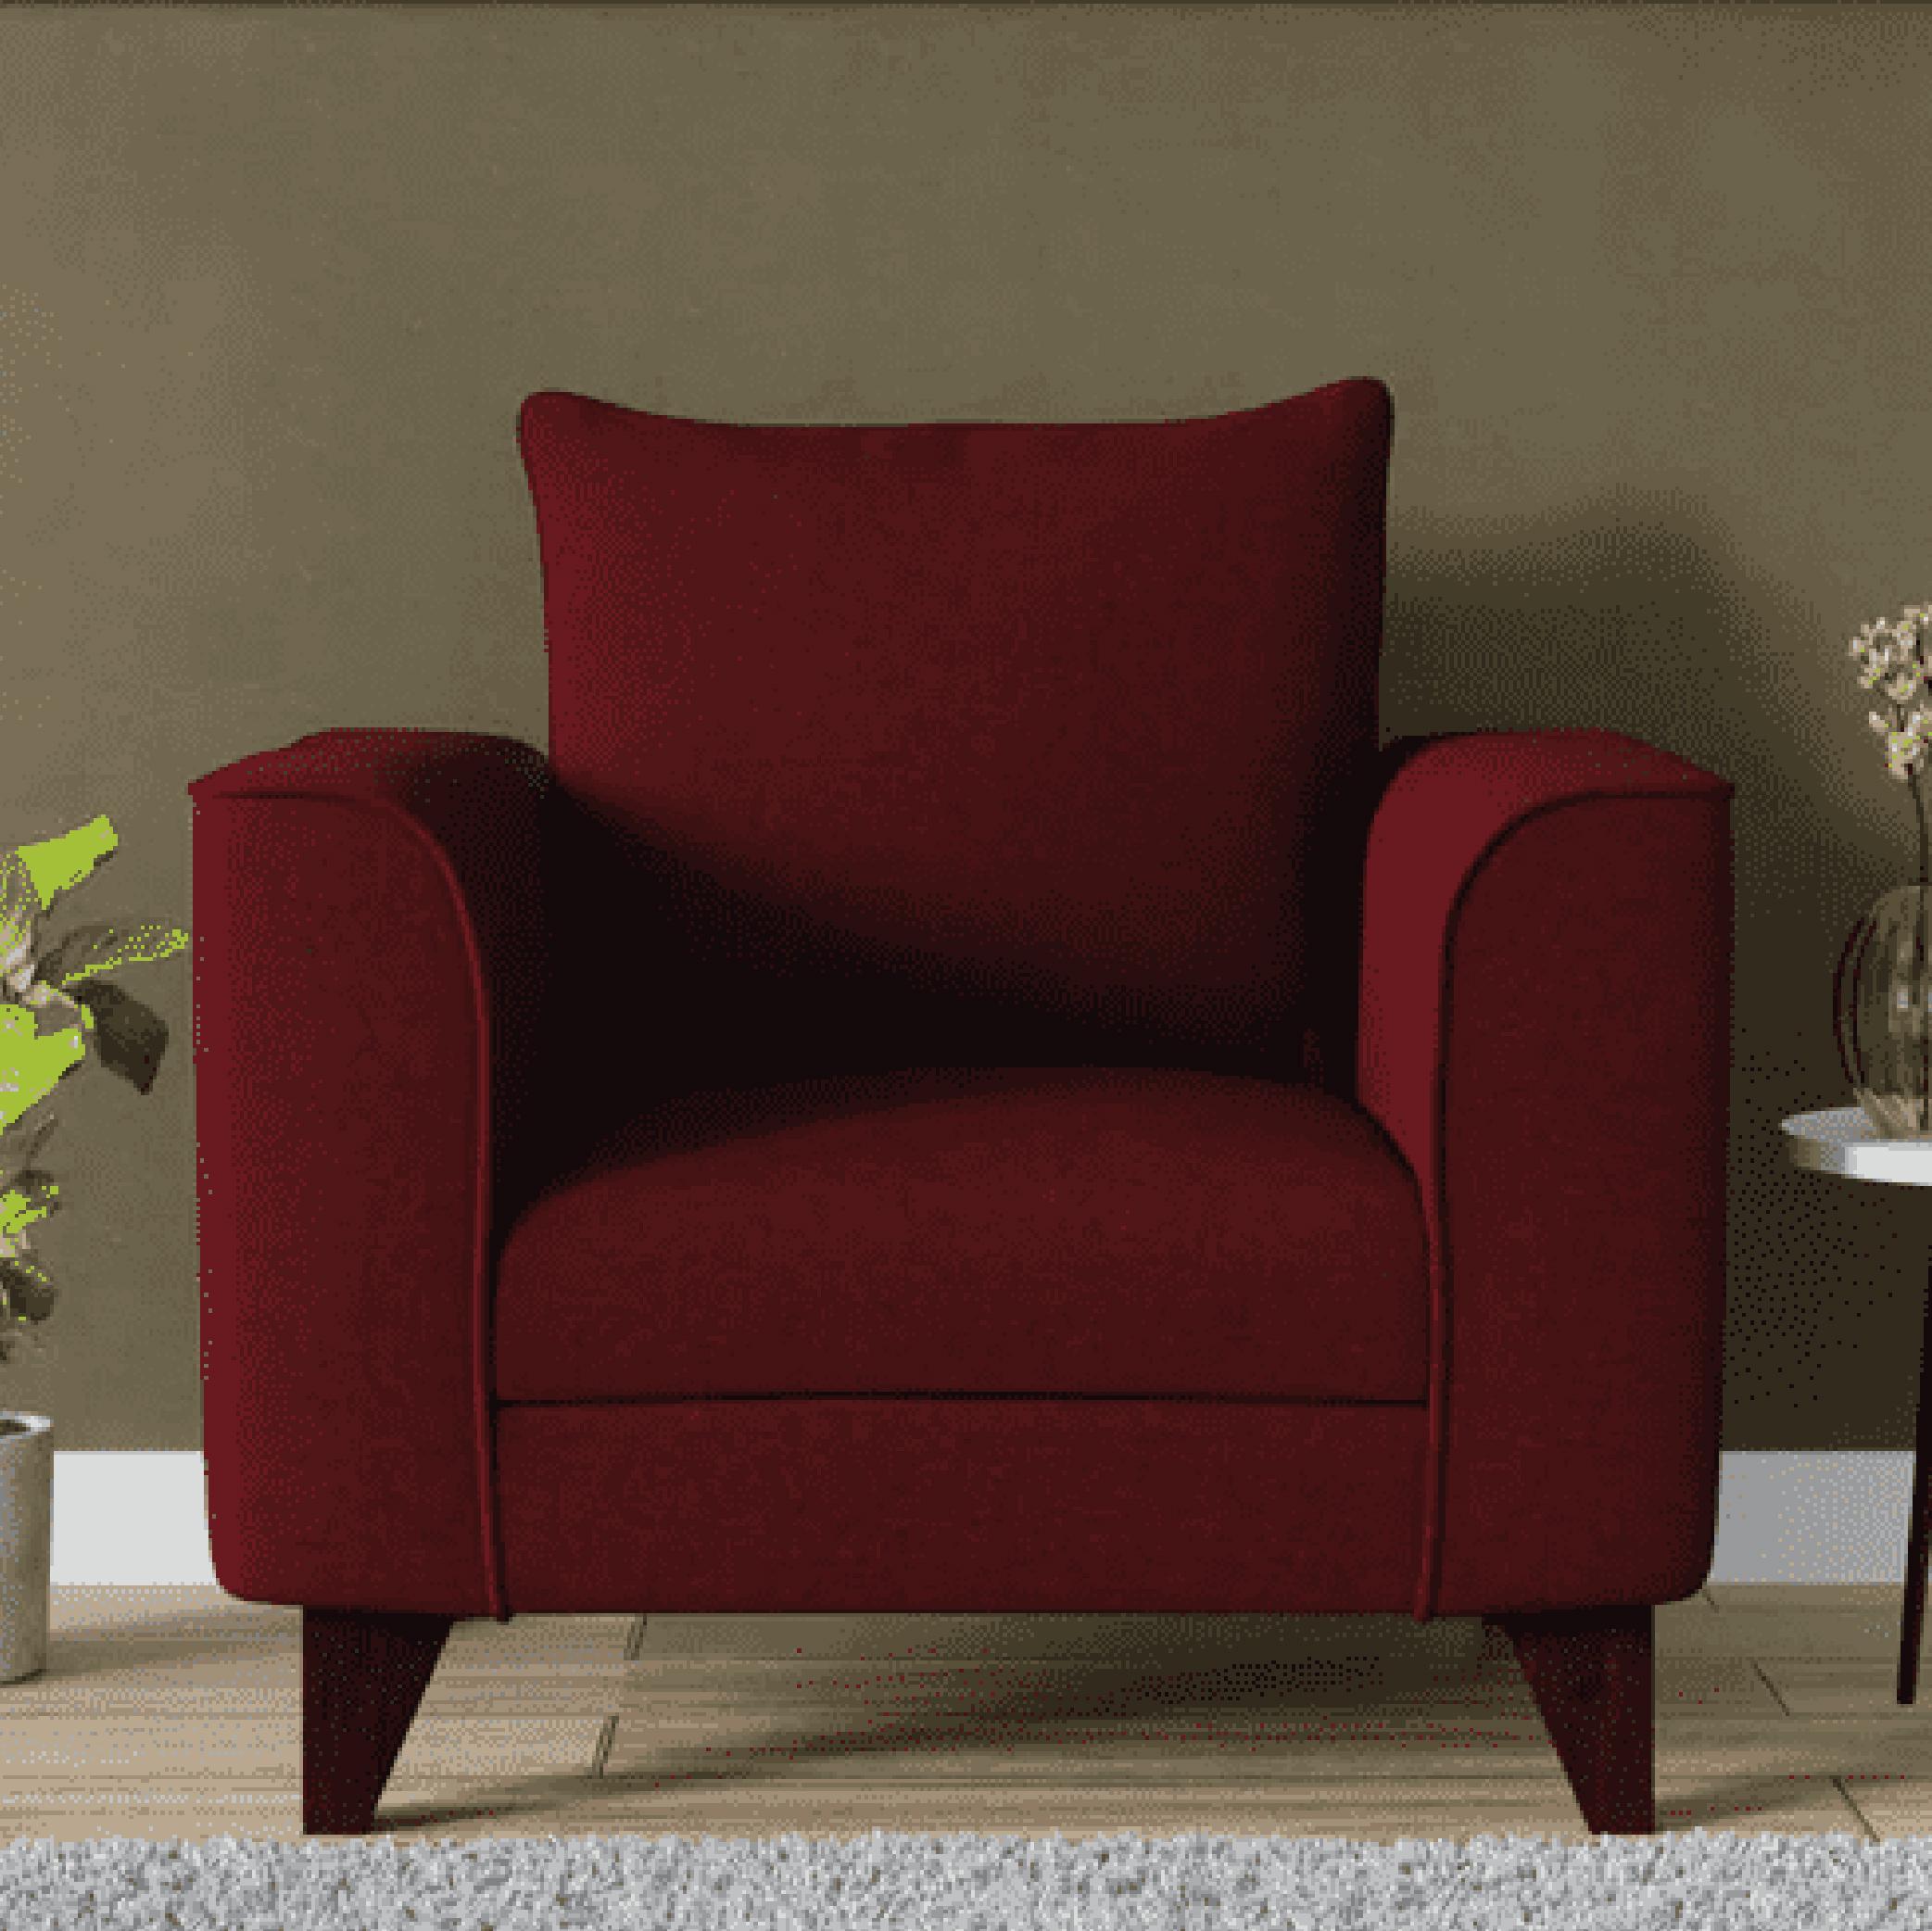 Sessa One Seater Sofa in Garnet Red Colour